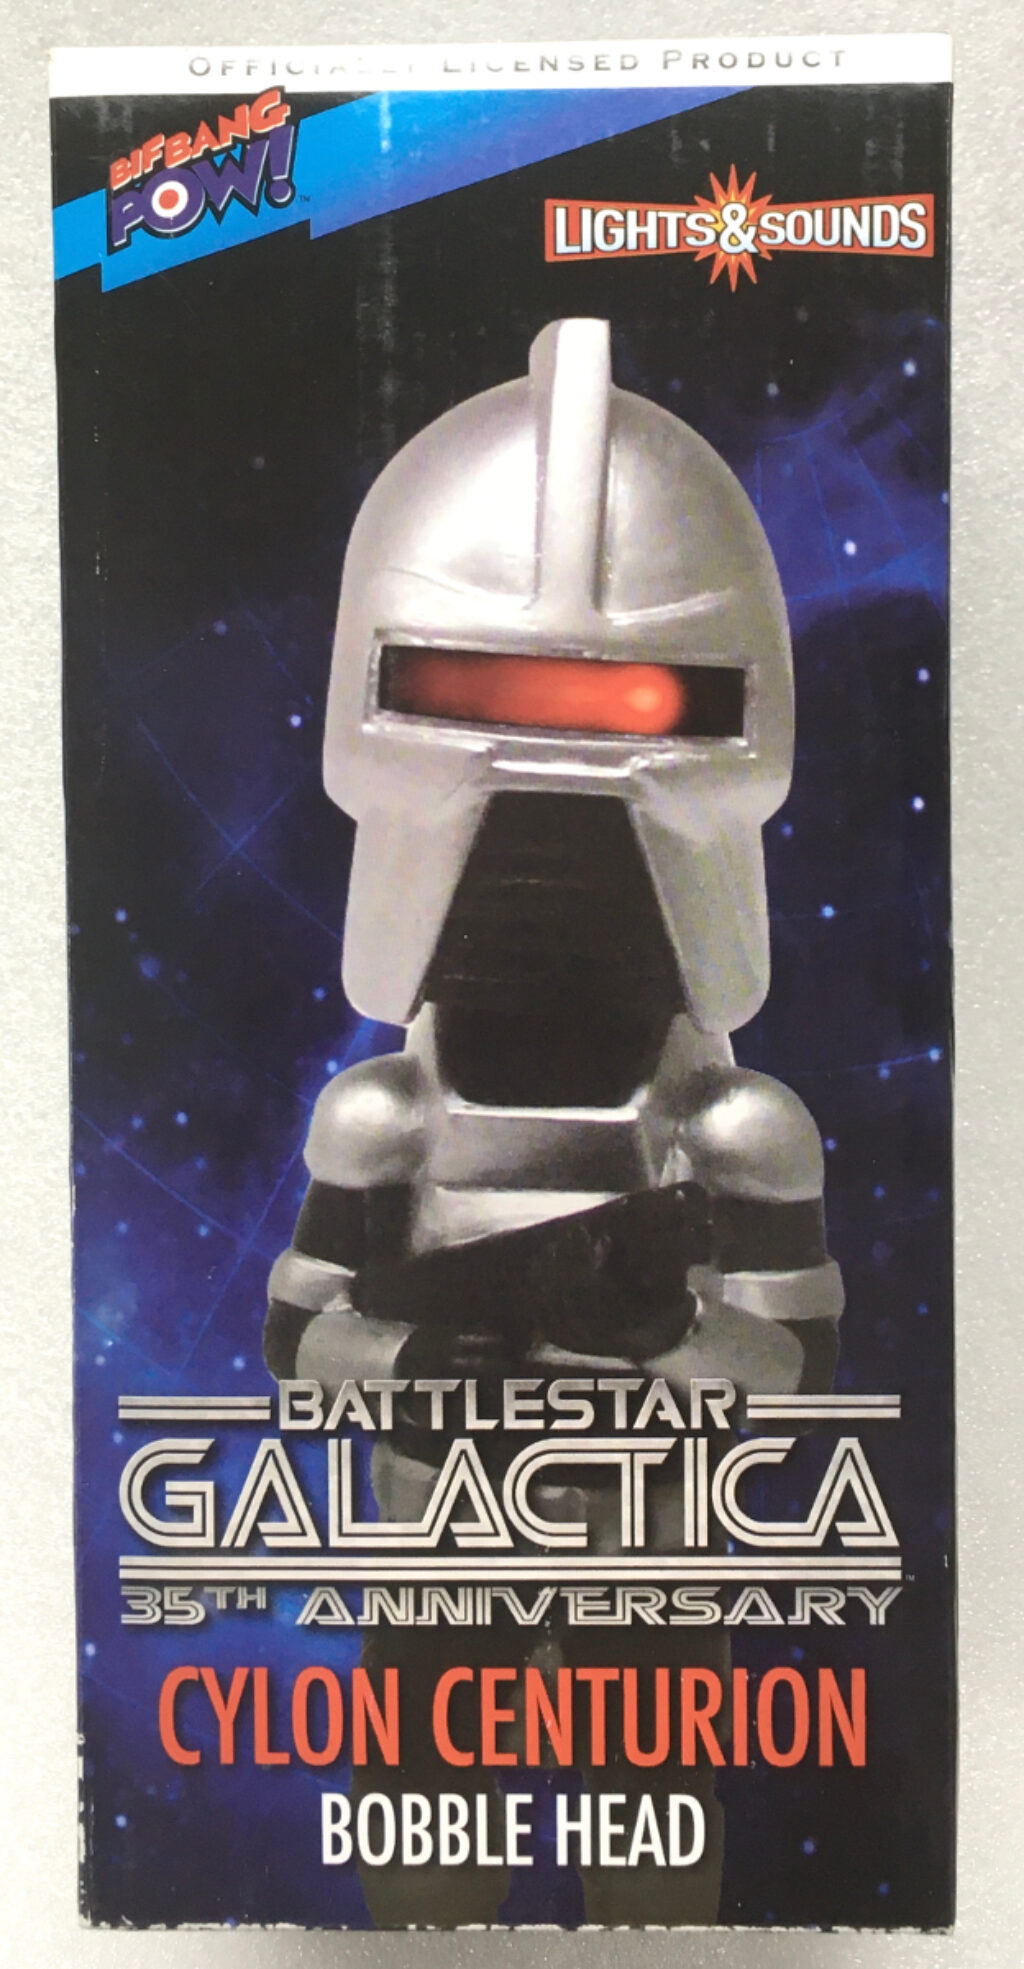 Battlestar Galactica Cylon Centurion Bobblehead from Bif Bang Pow!